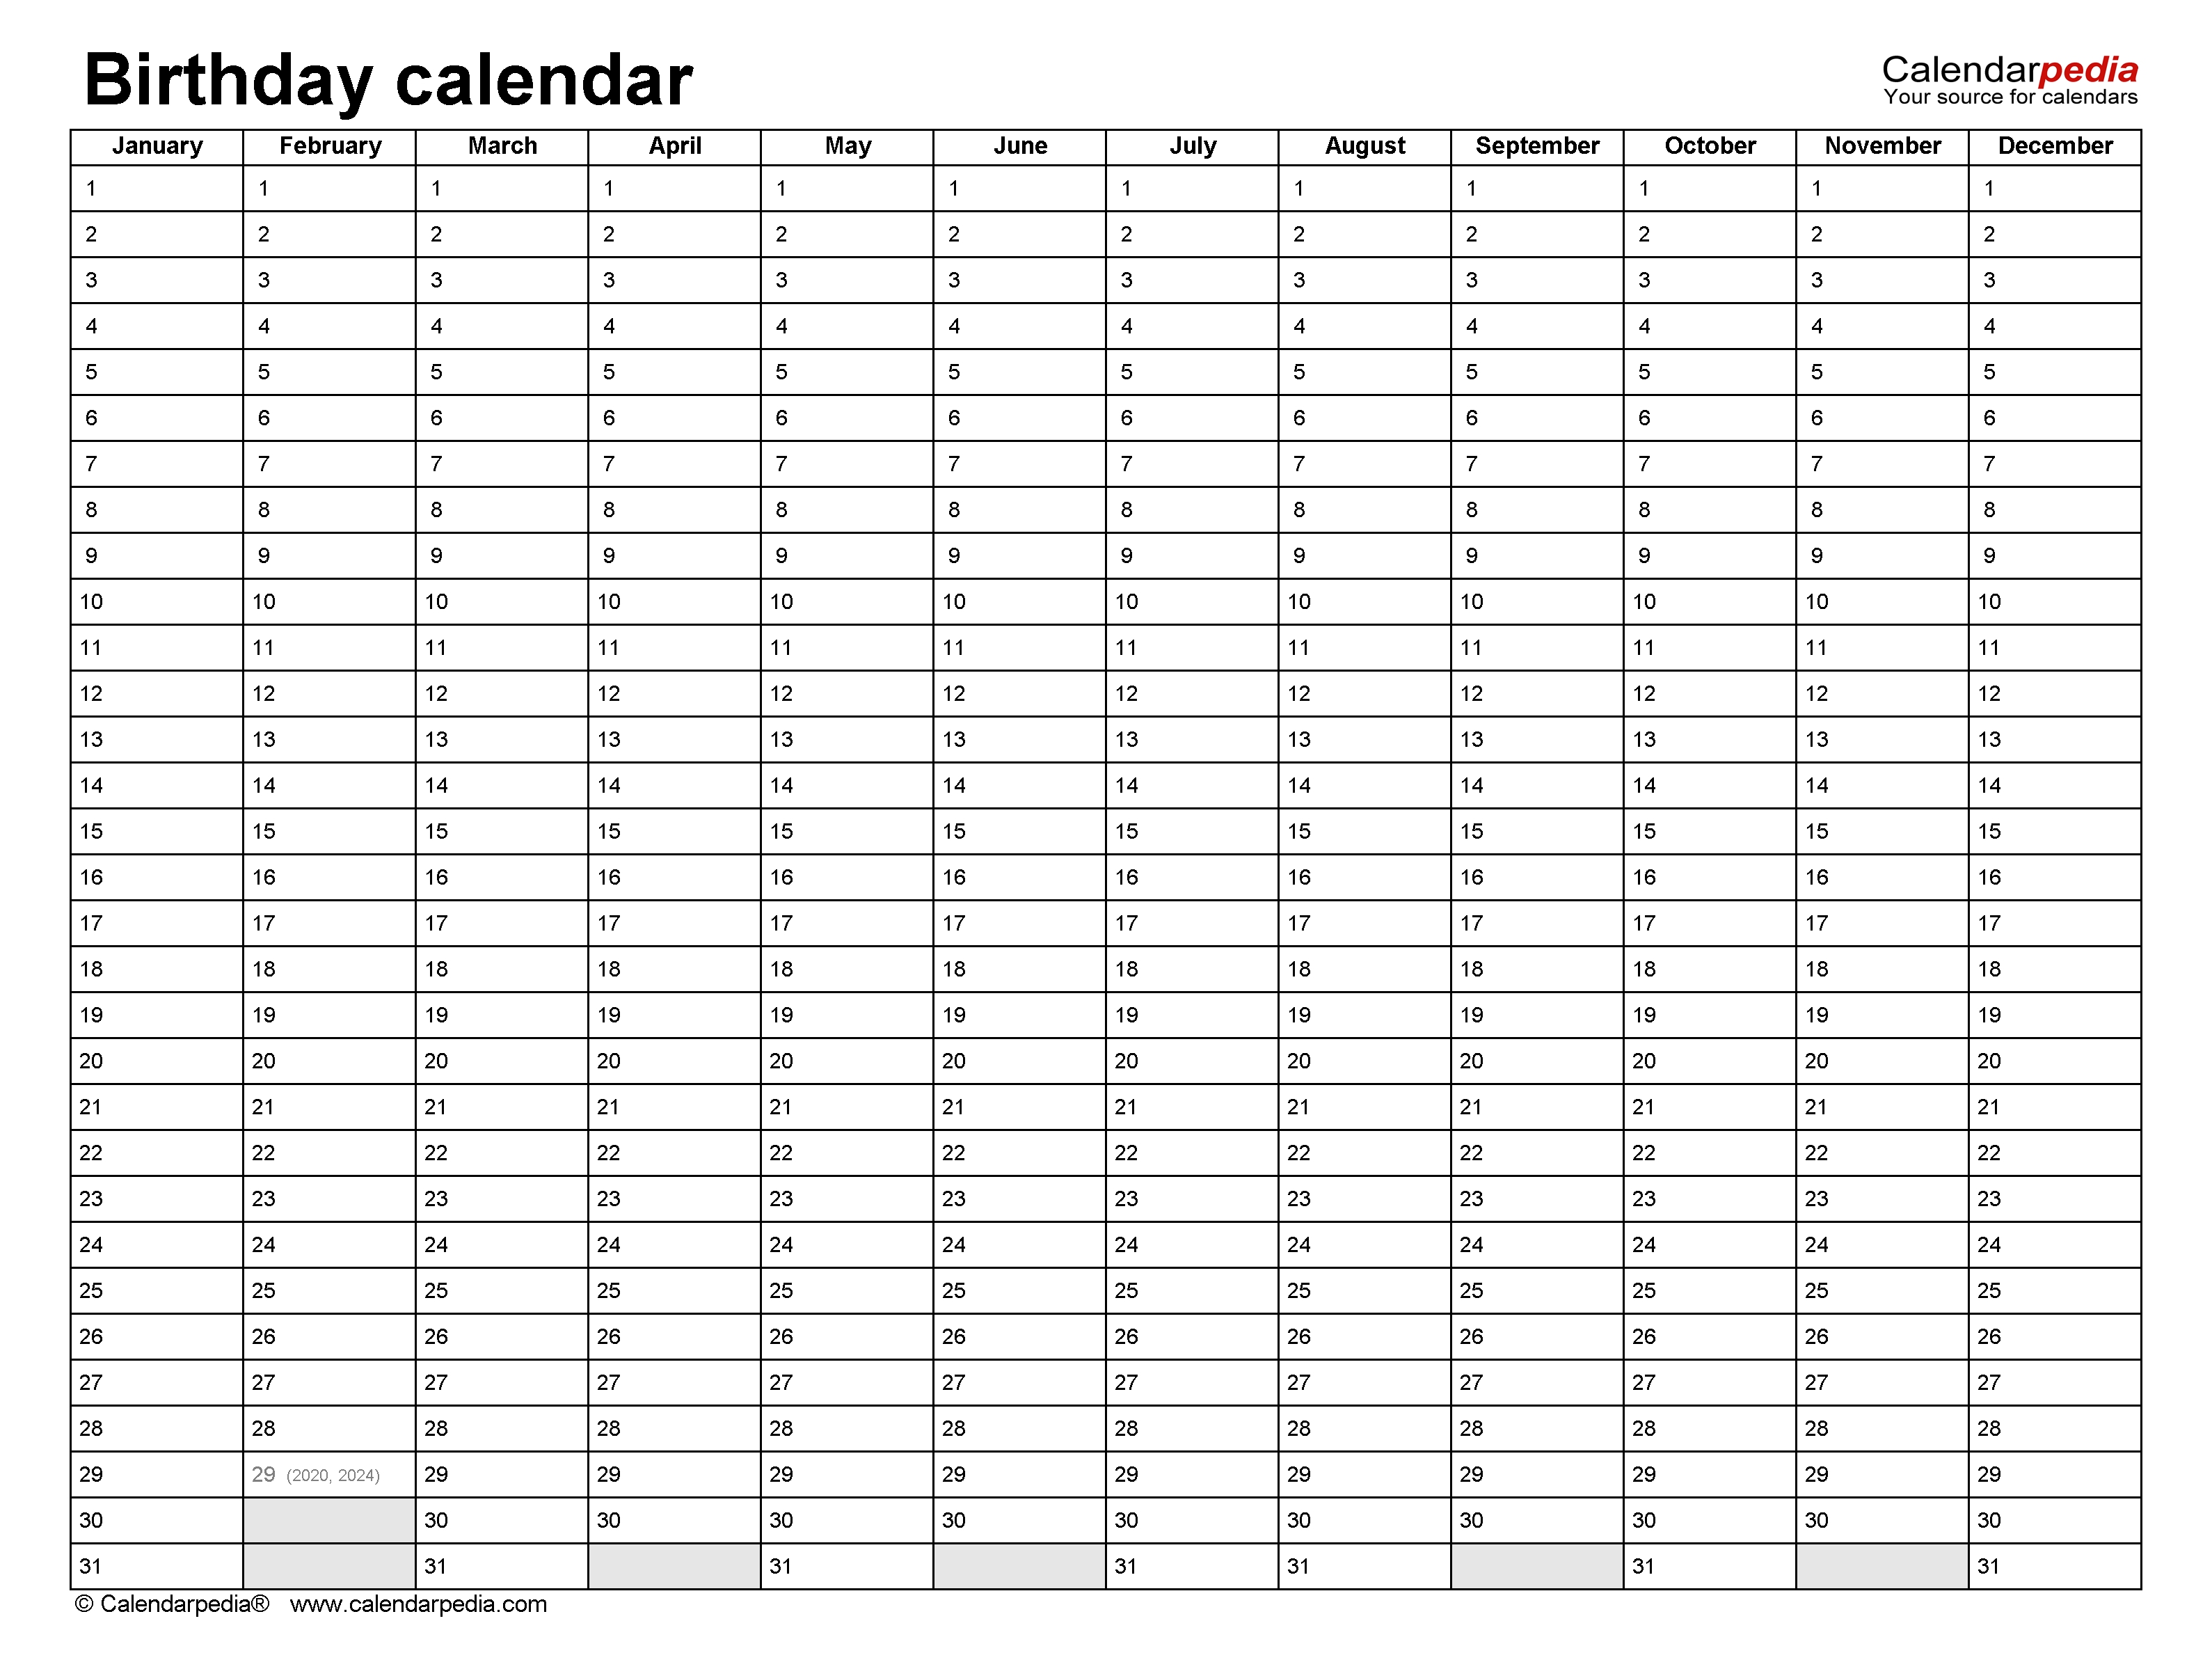 Birthday Calendars - Free Printable Microsoft Excel Templates